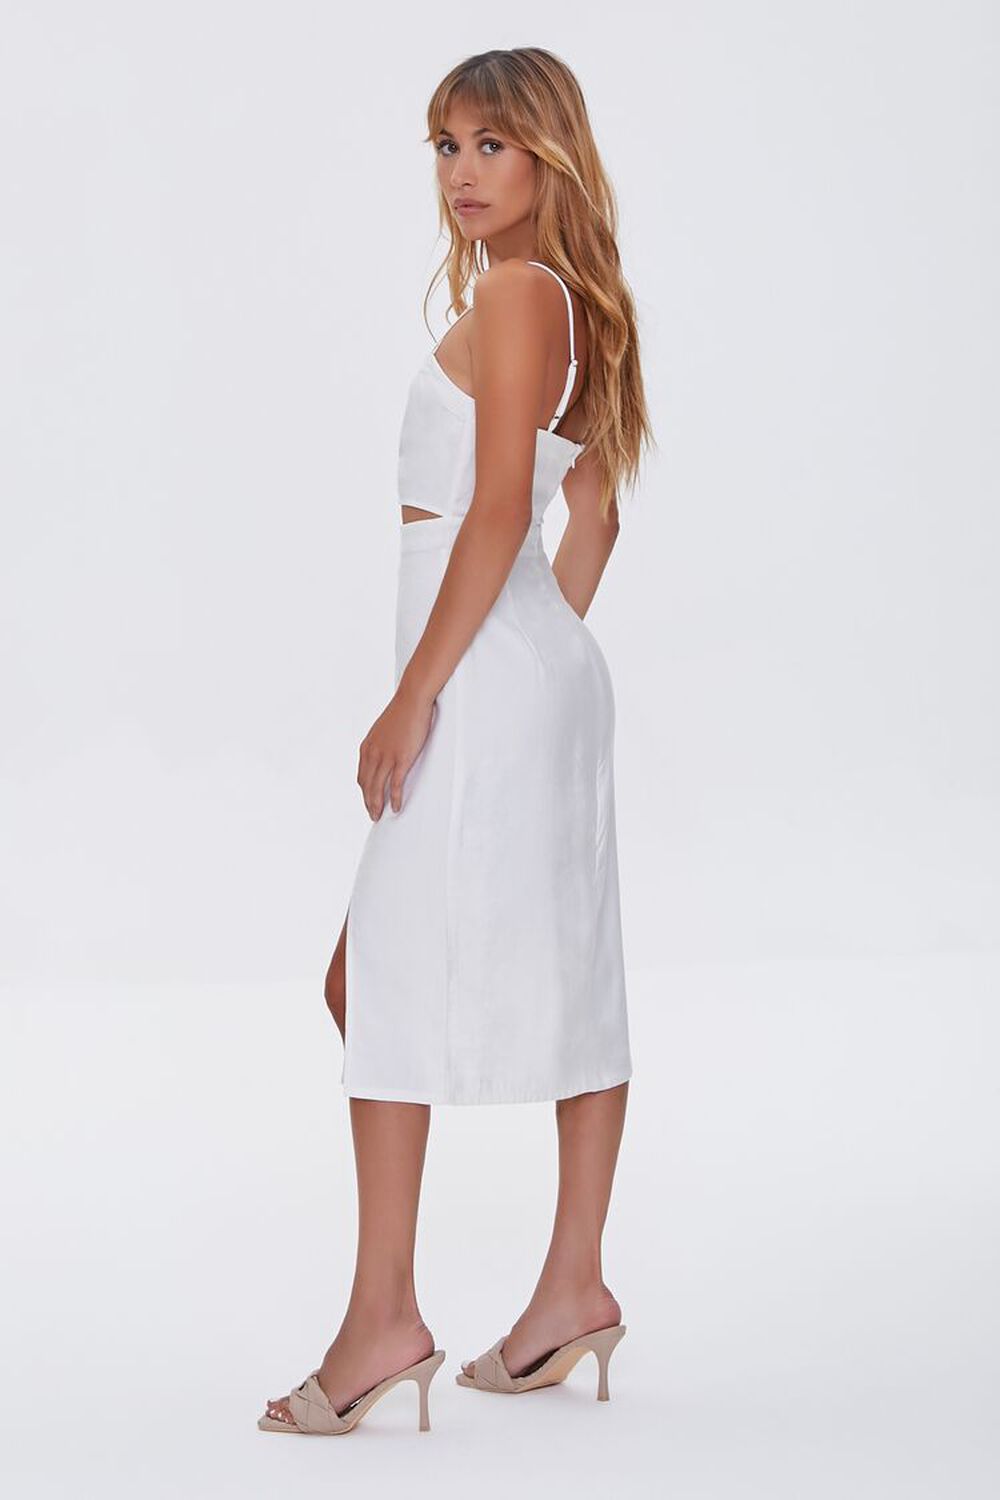 IVORY Cutout Side-Slit Midi Dress, image 2